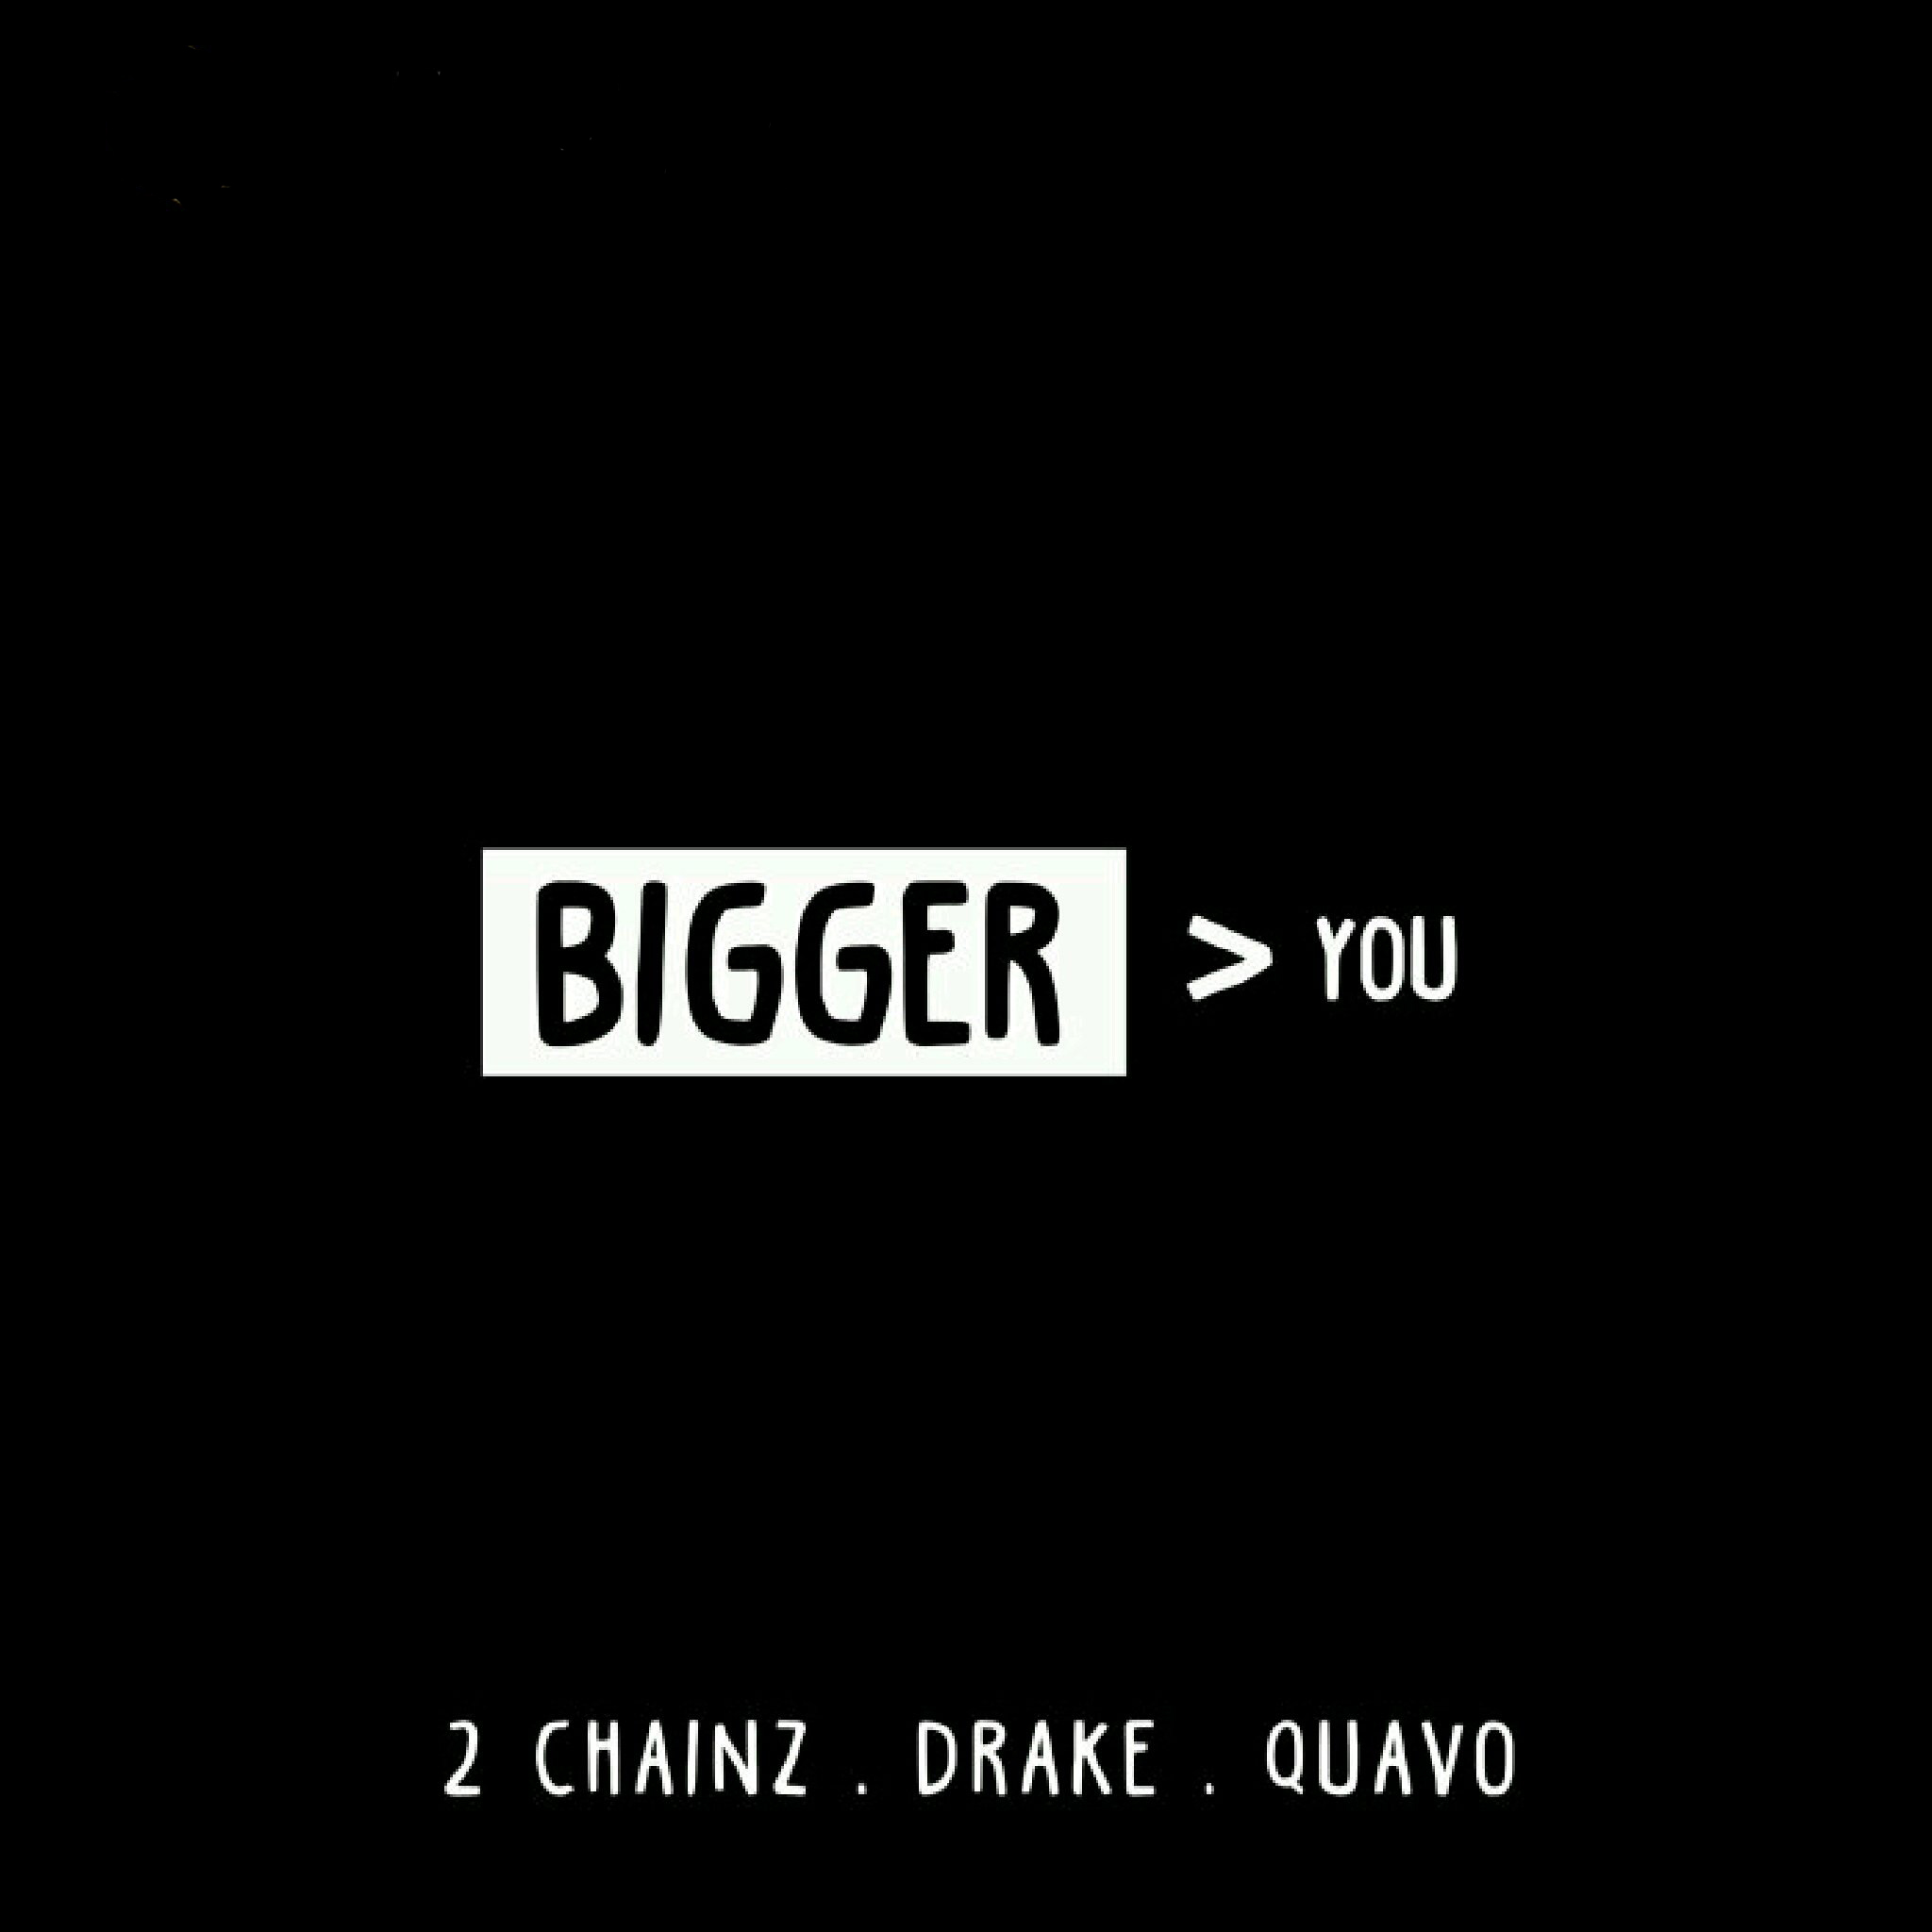 Bigger than this 2. Bigger than bigger. 2 Chainz треки. Bigger than you. Bigger песня.